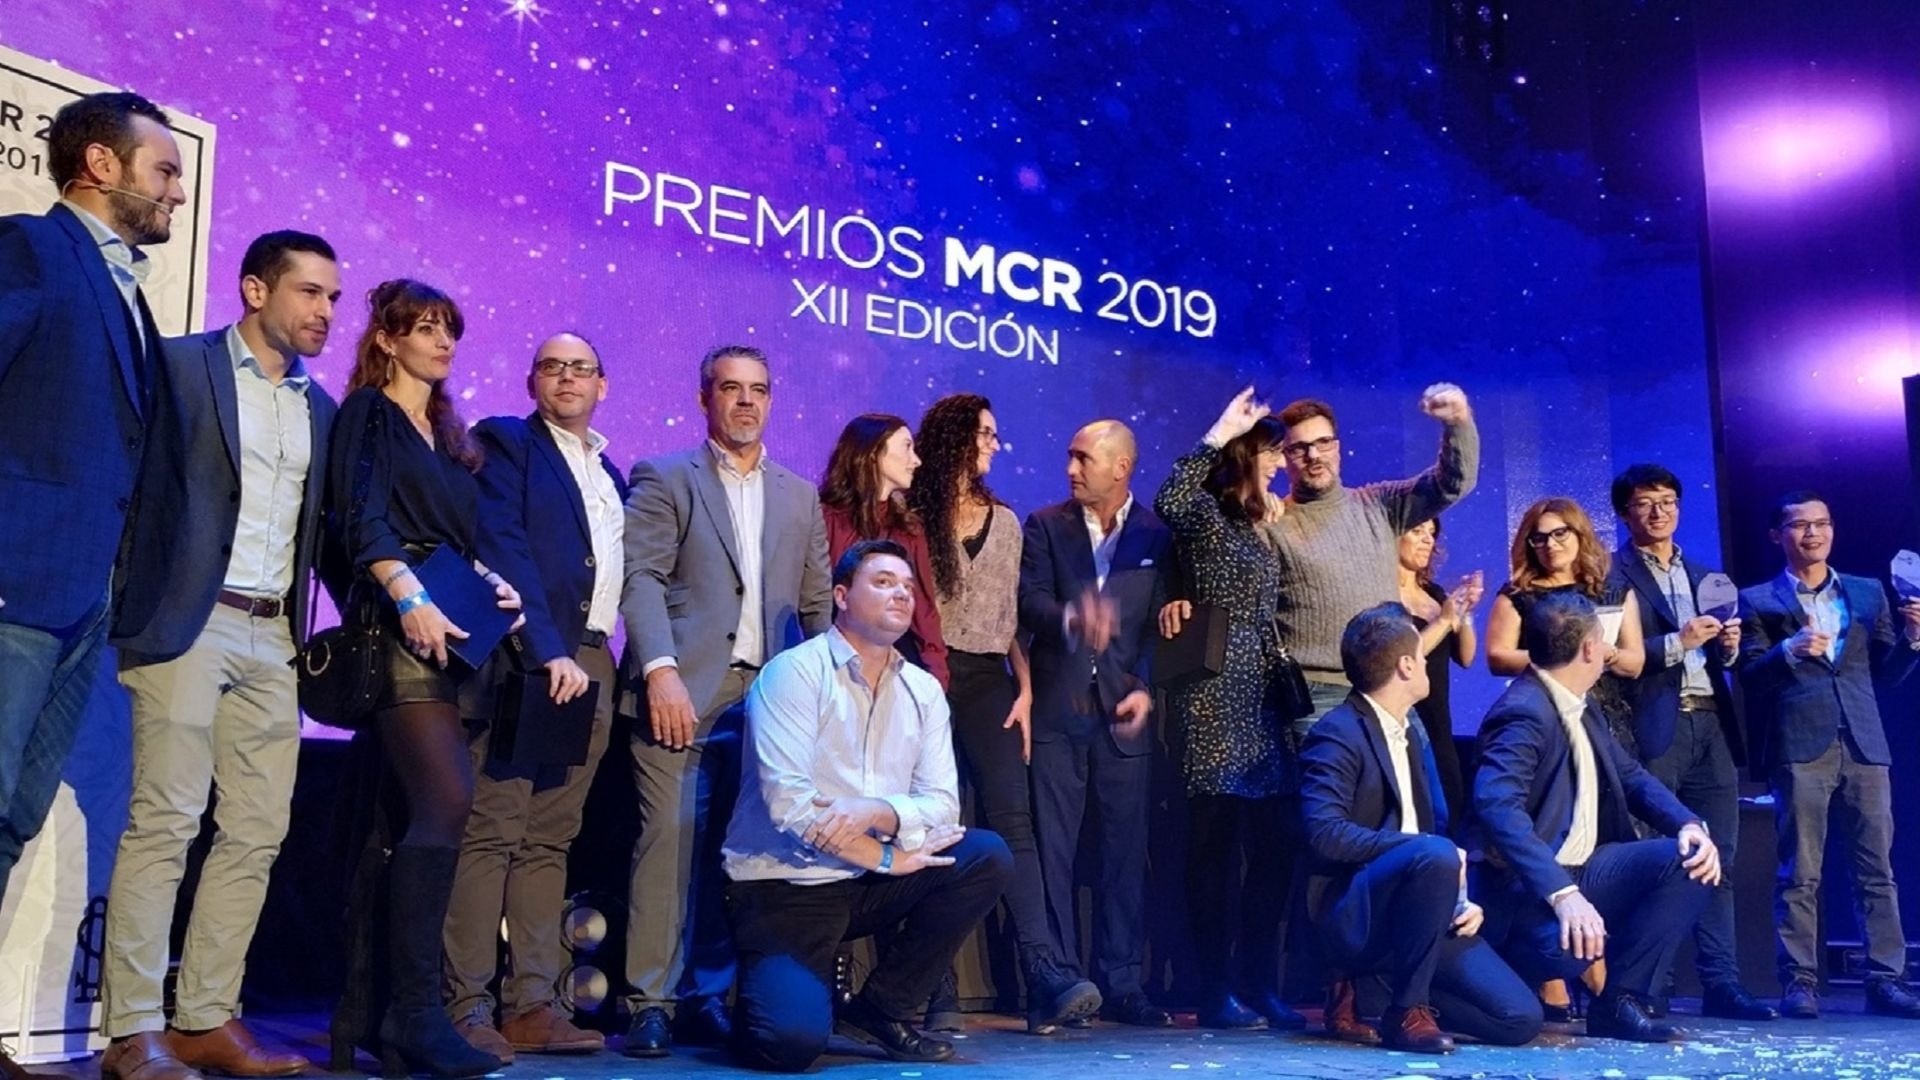 Premios MCR 2019